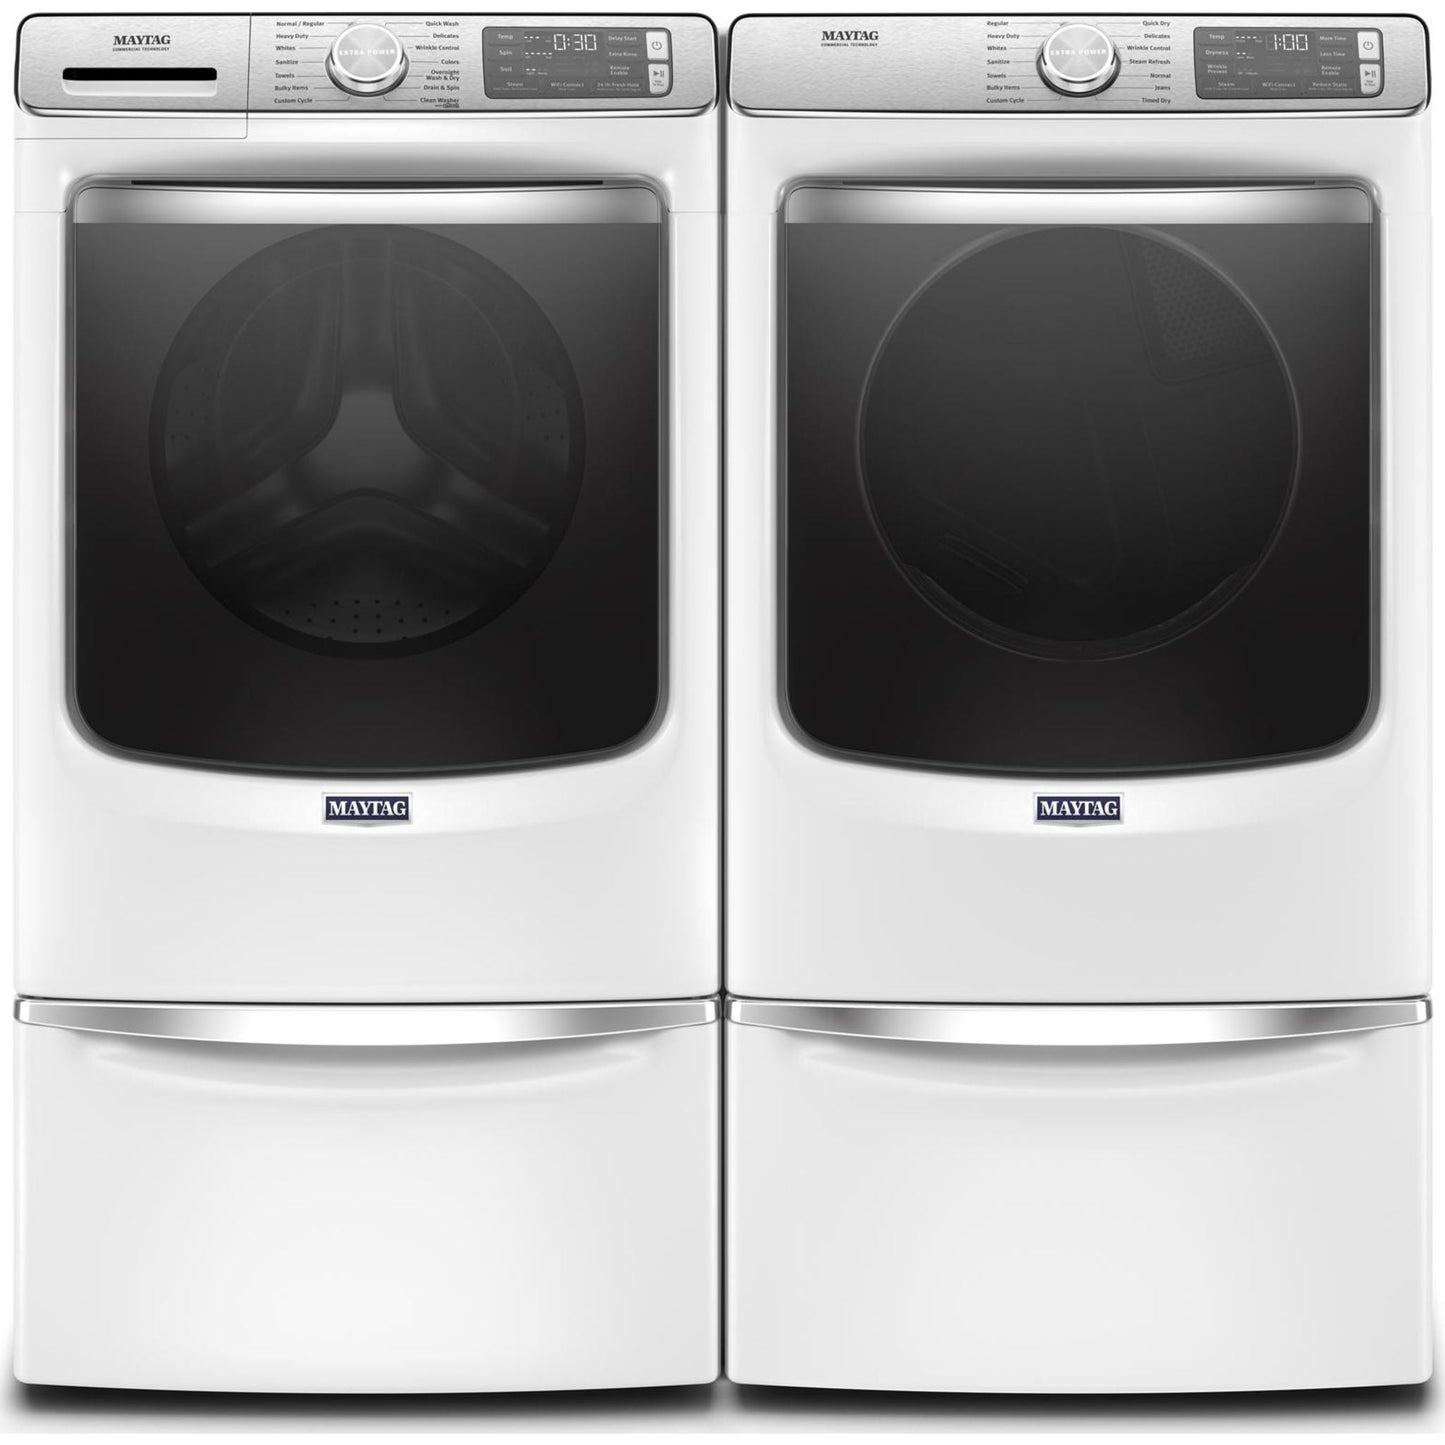 Maytag Gas Dryer (MGD8630HW) - White